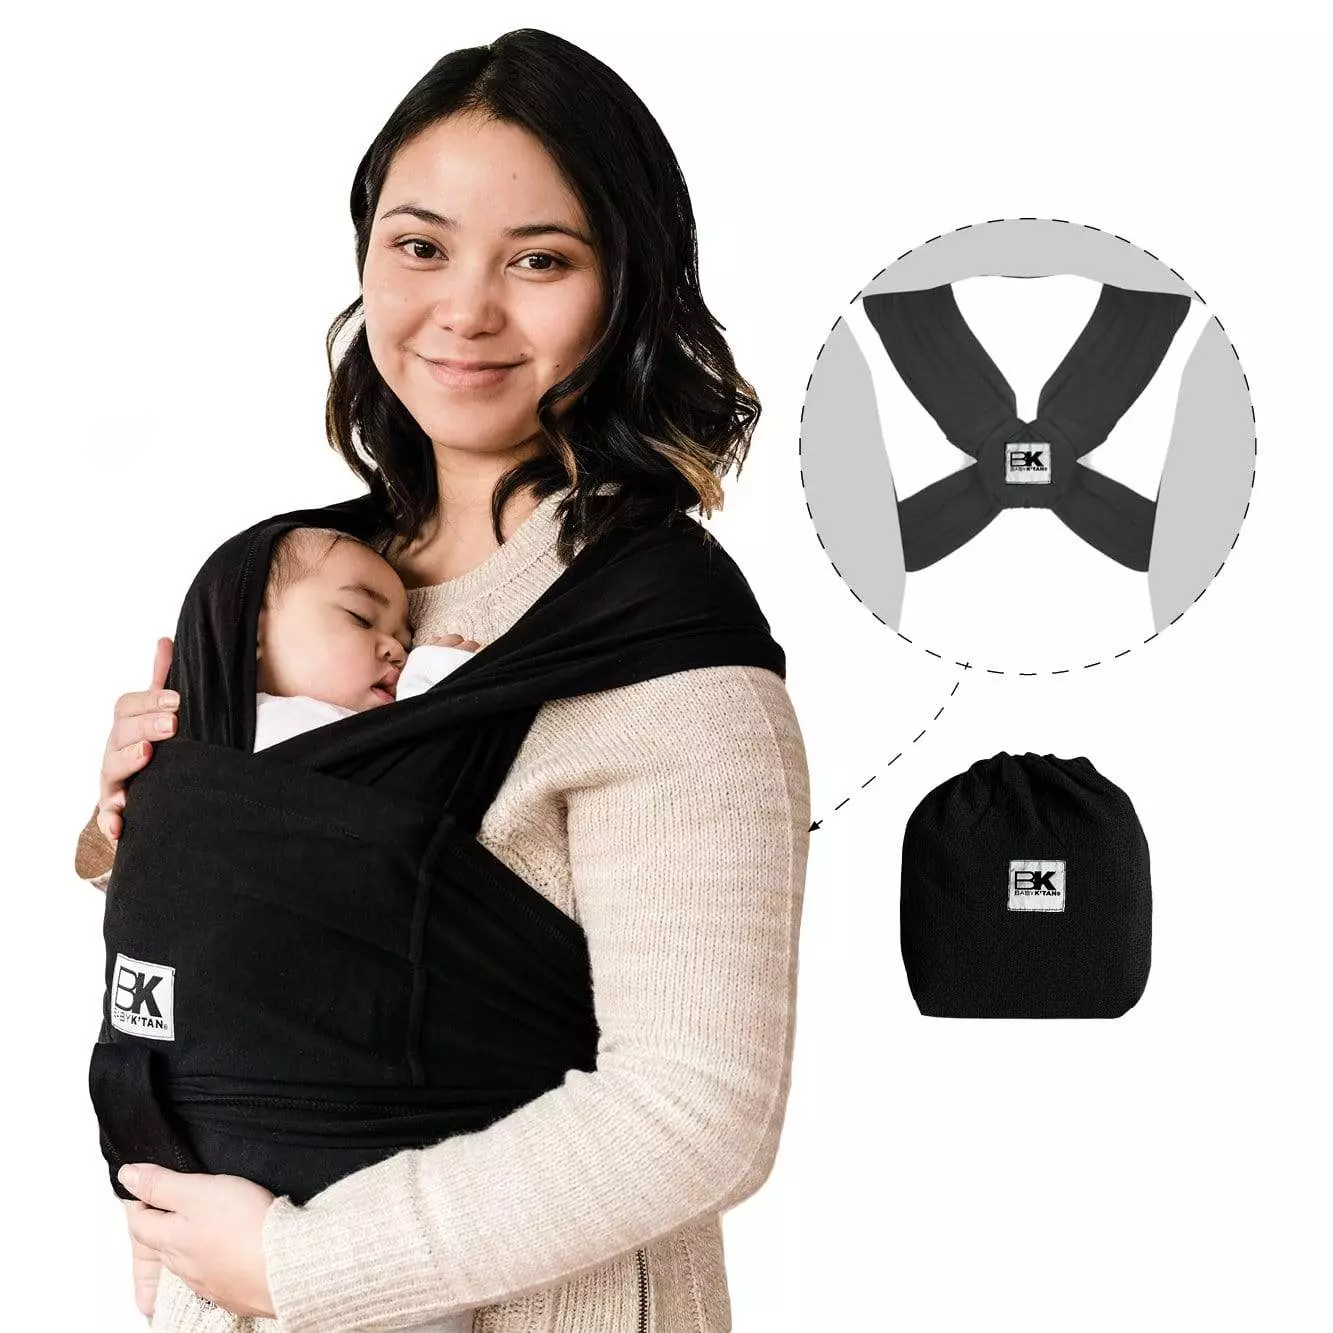  Baby K’tan Original Baby Wrap Carrier